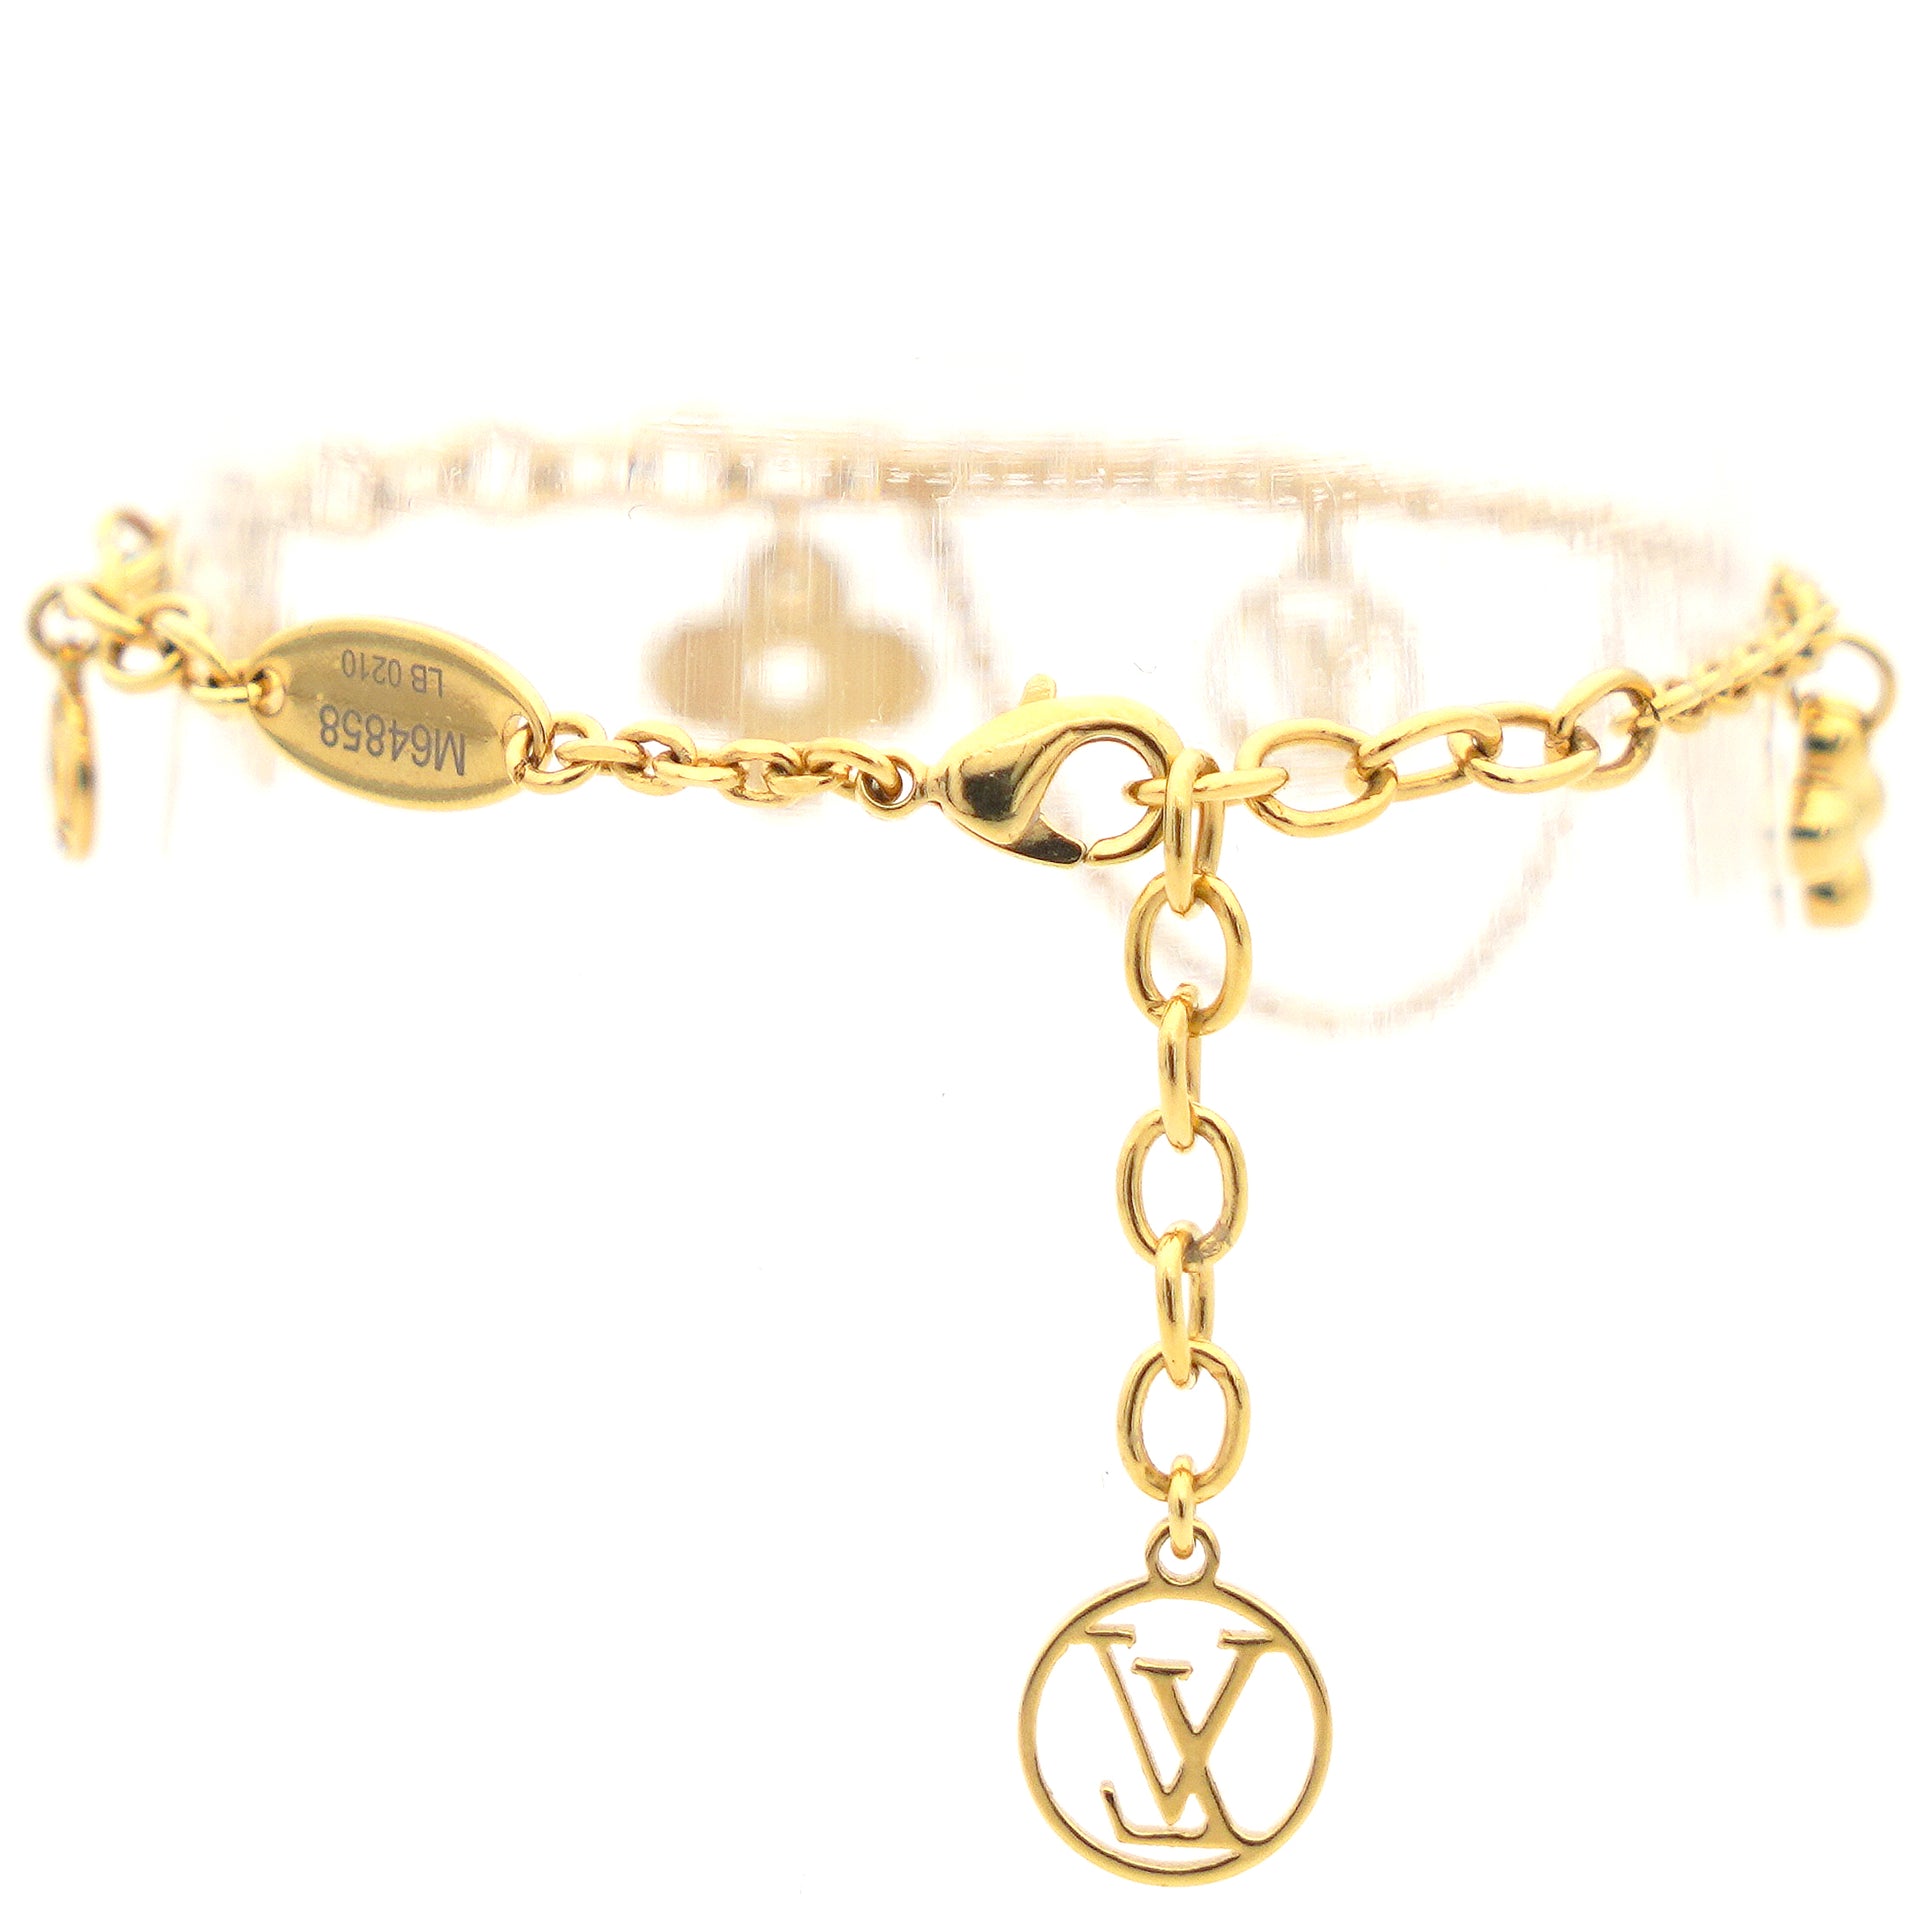 Louis Vuitton MONOGRAM Blooming supple bracelet (M64858)